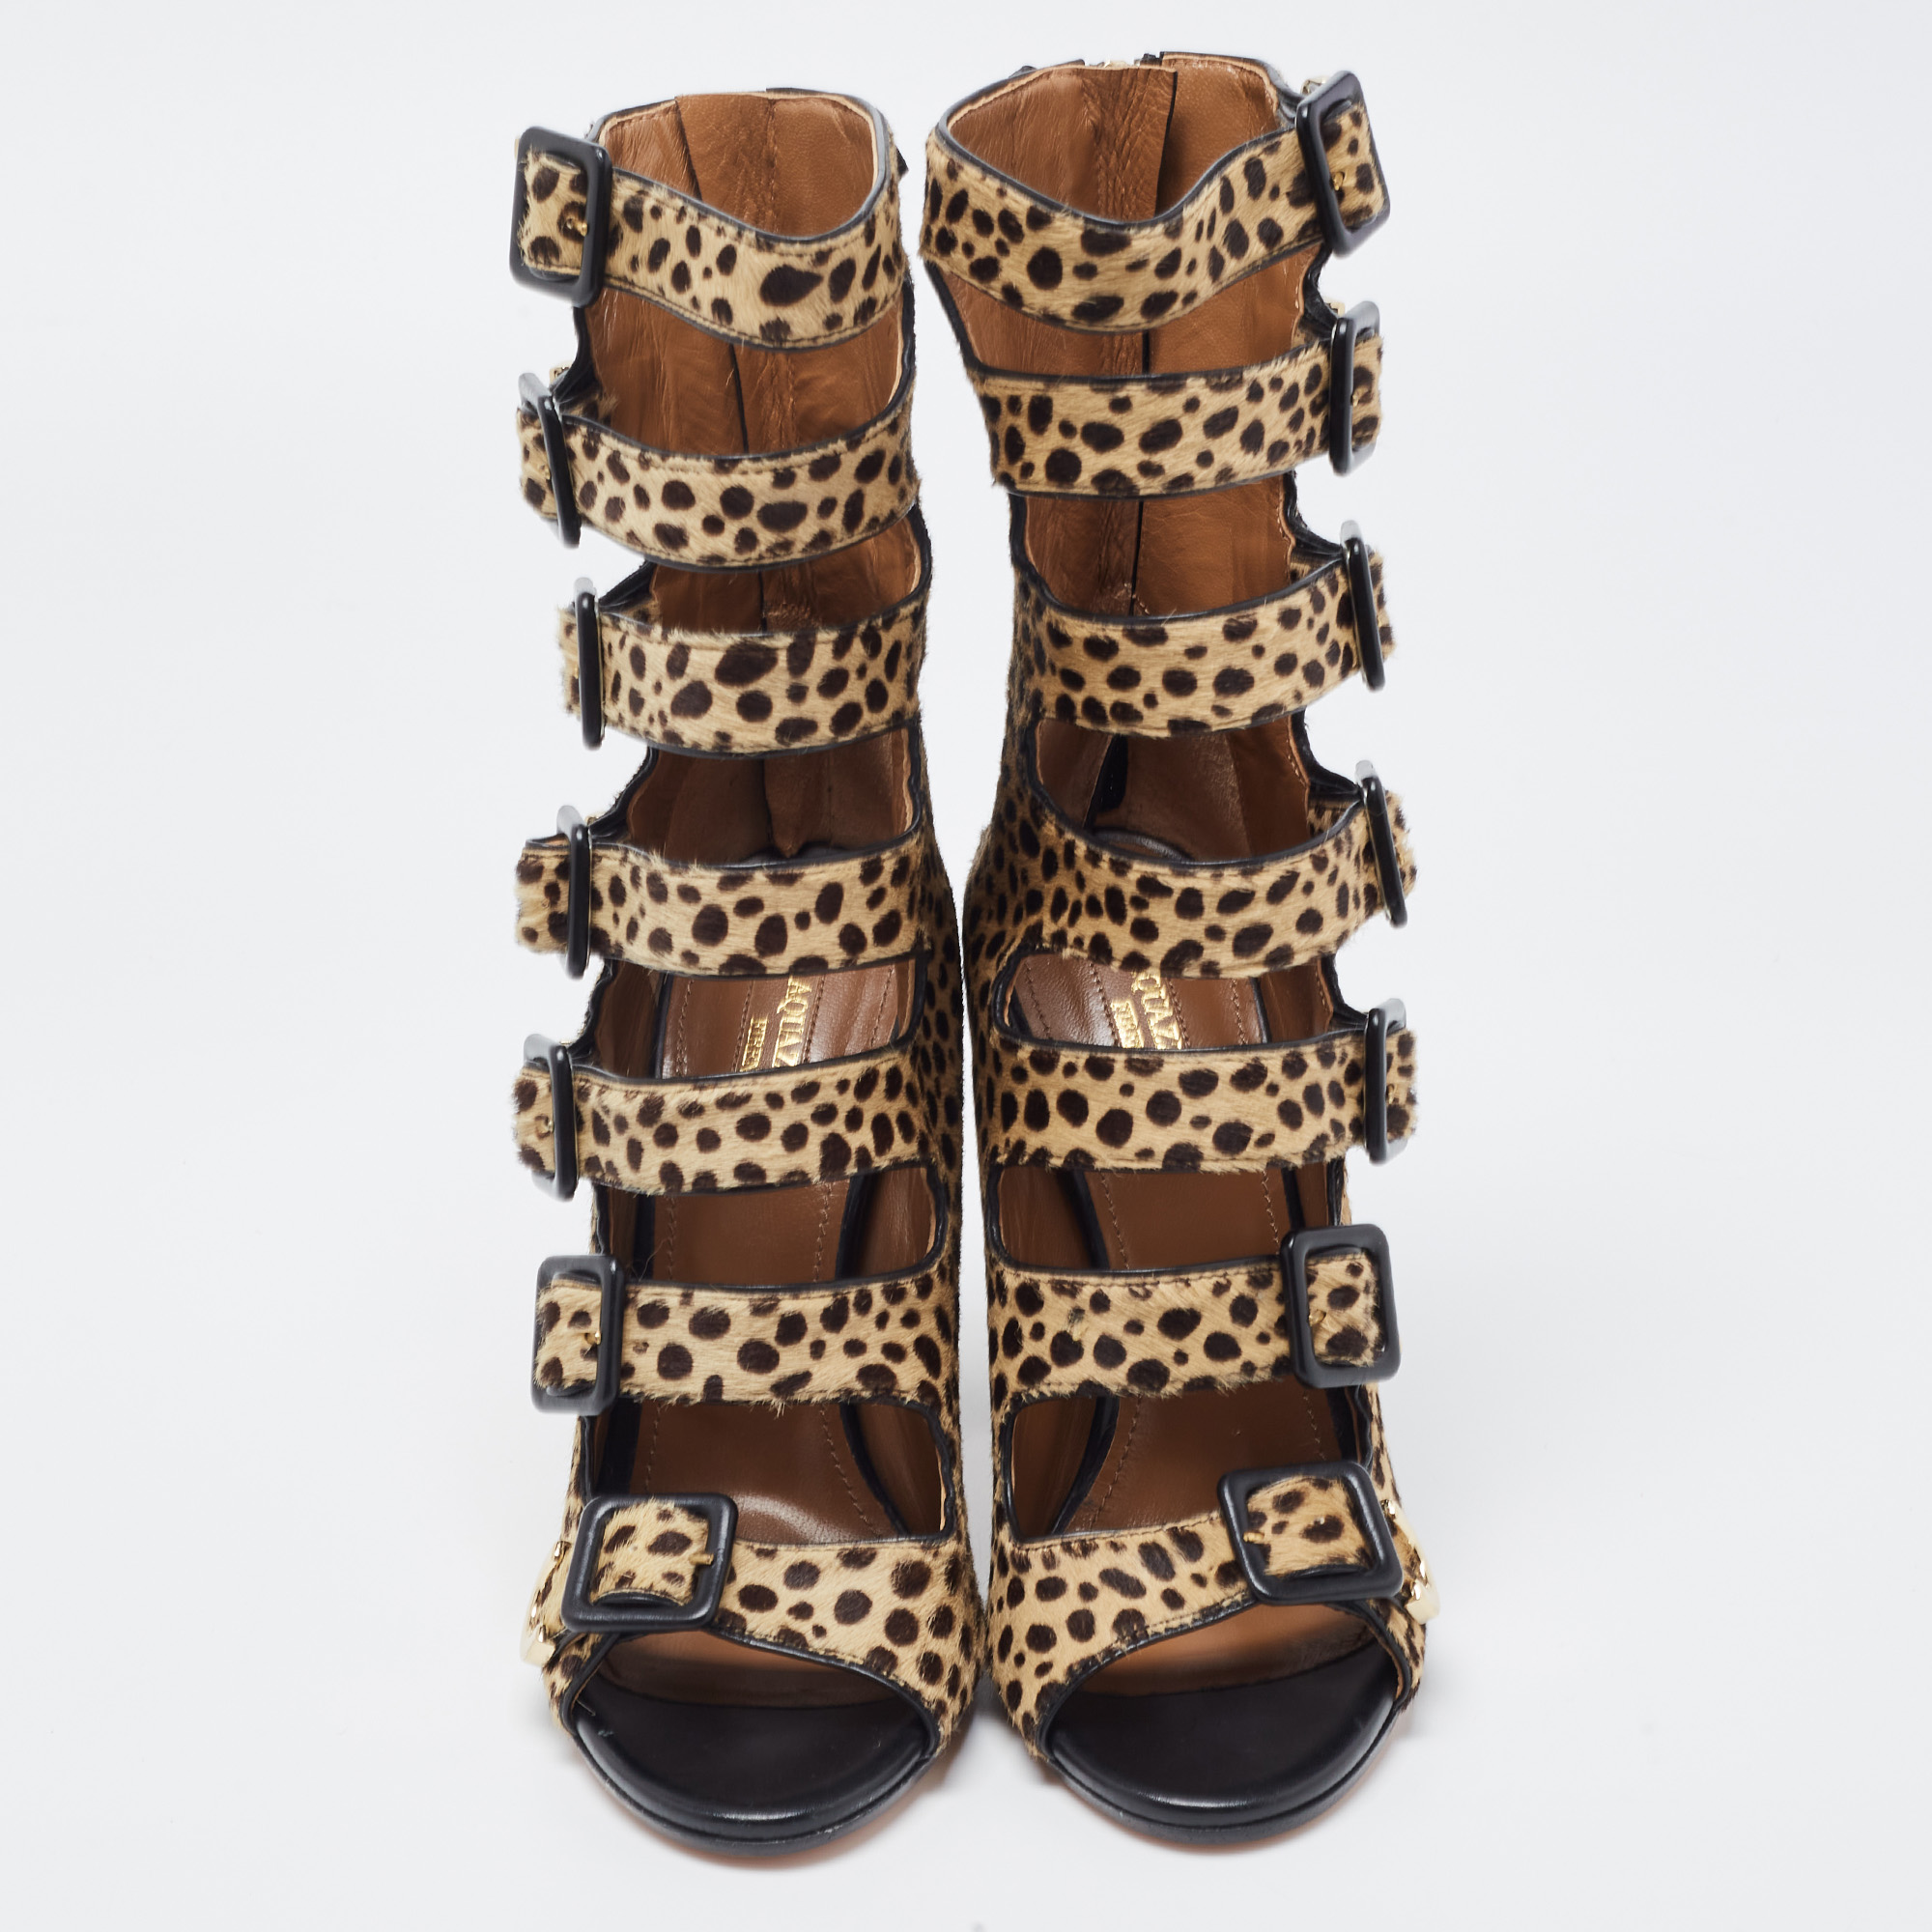 Aquazzura Brown/Black Calf Hair Leopard Print Gladiator Sandals Size 37